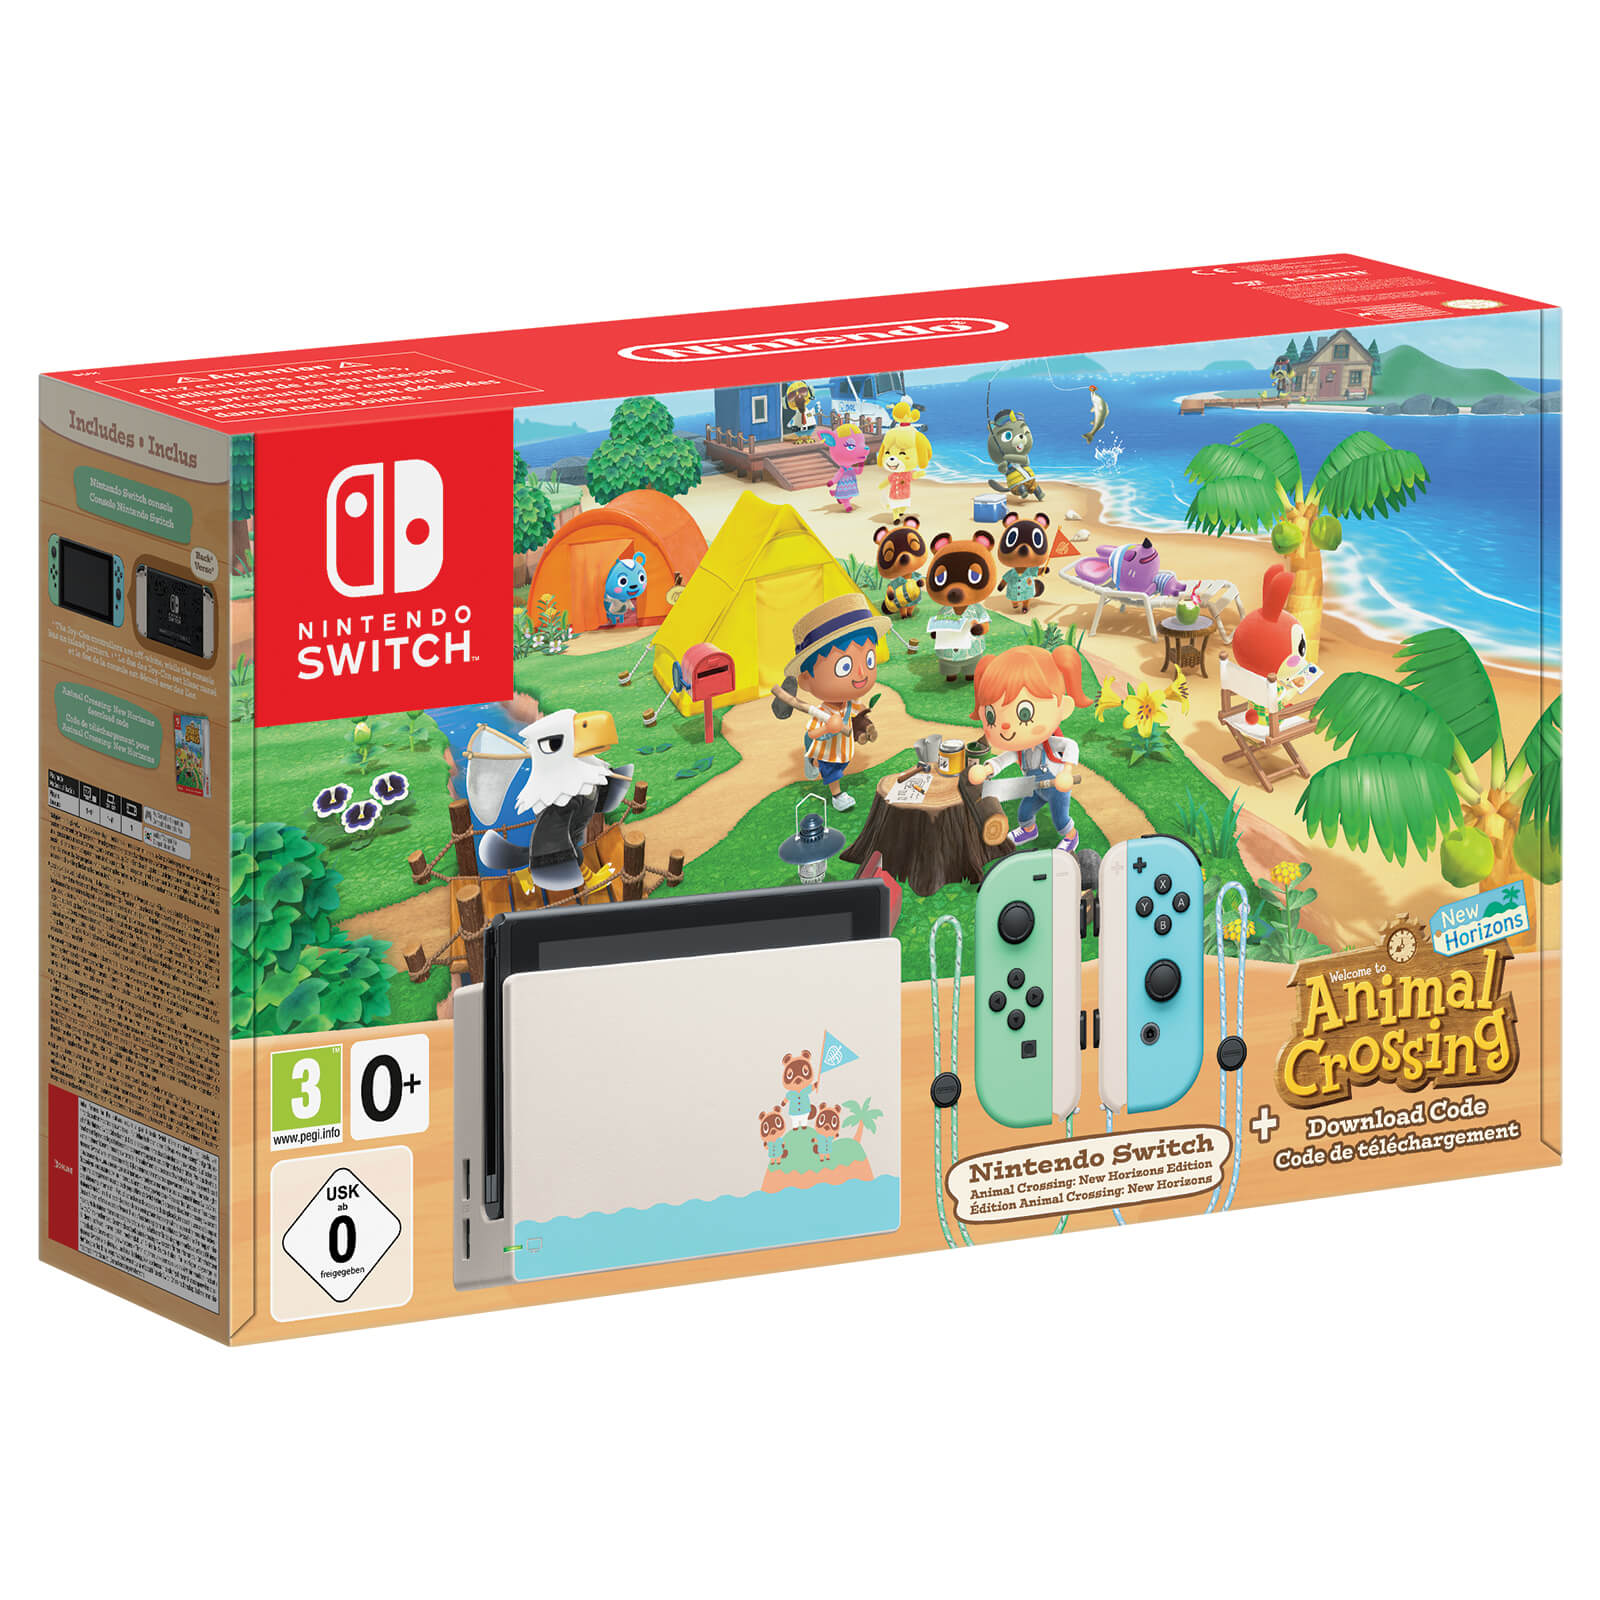 Máy Nintendo Switch Mới - Animal Crossing Bundle